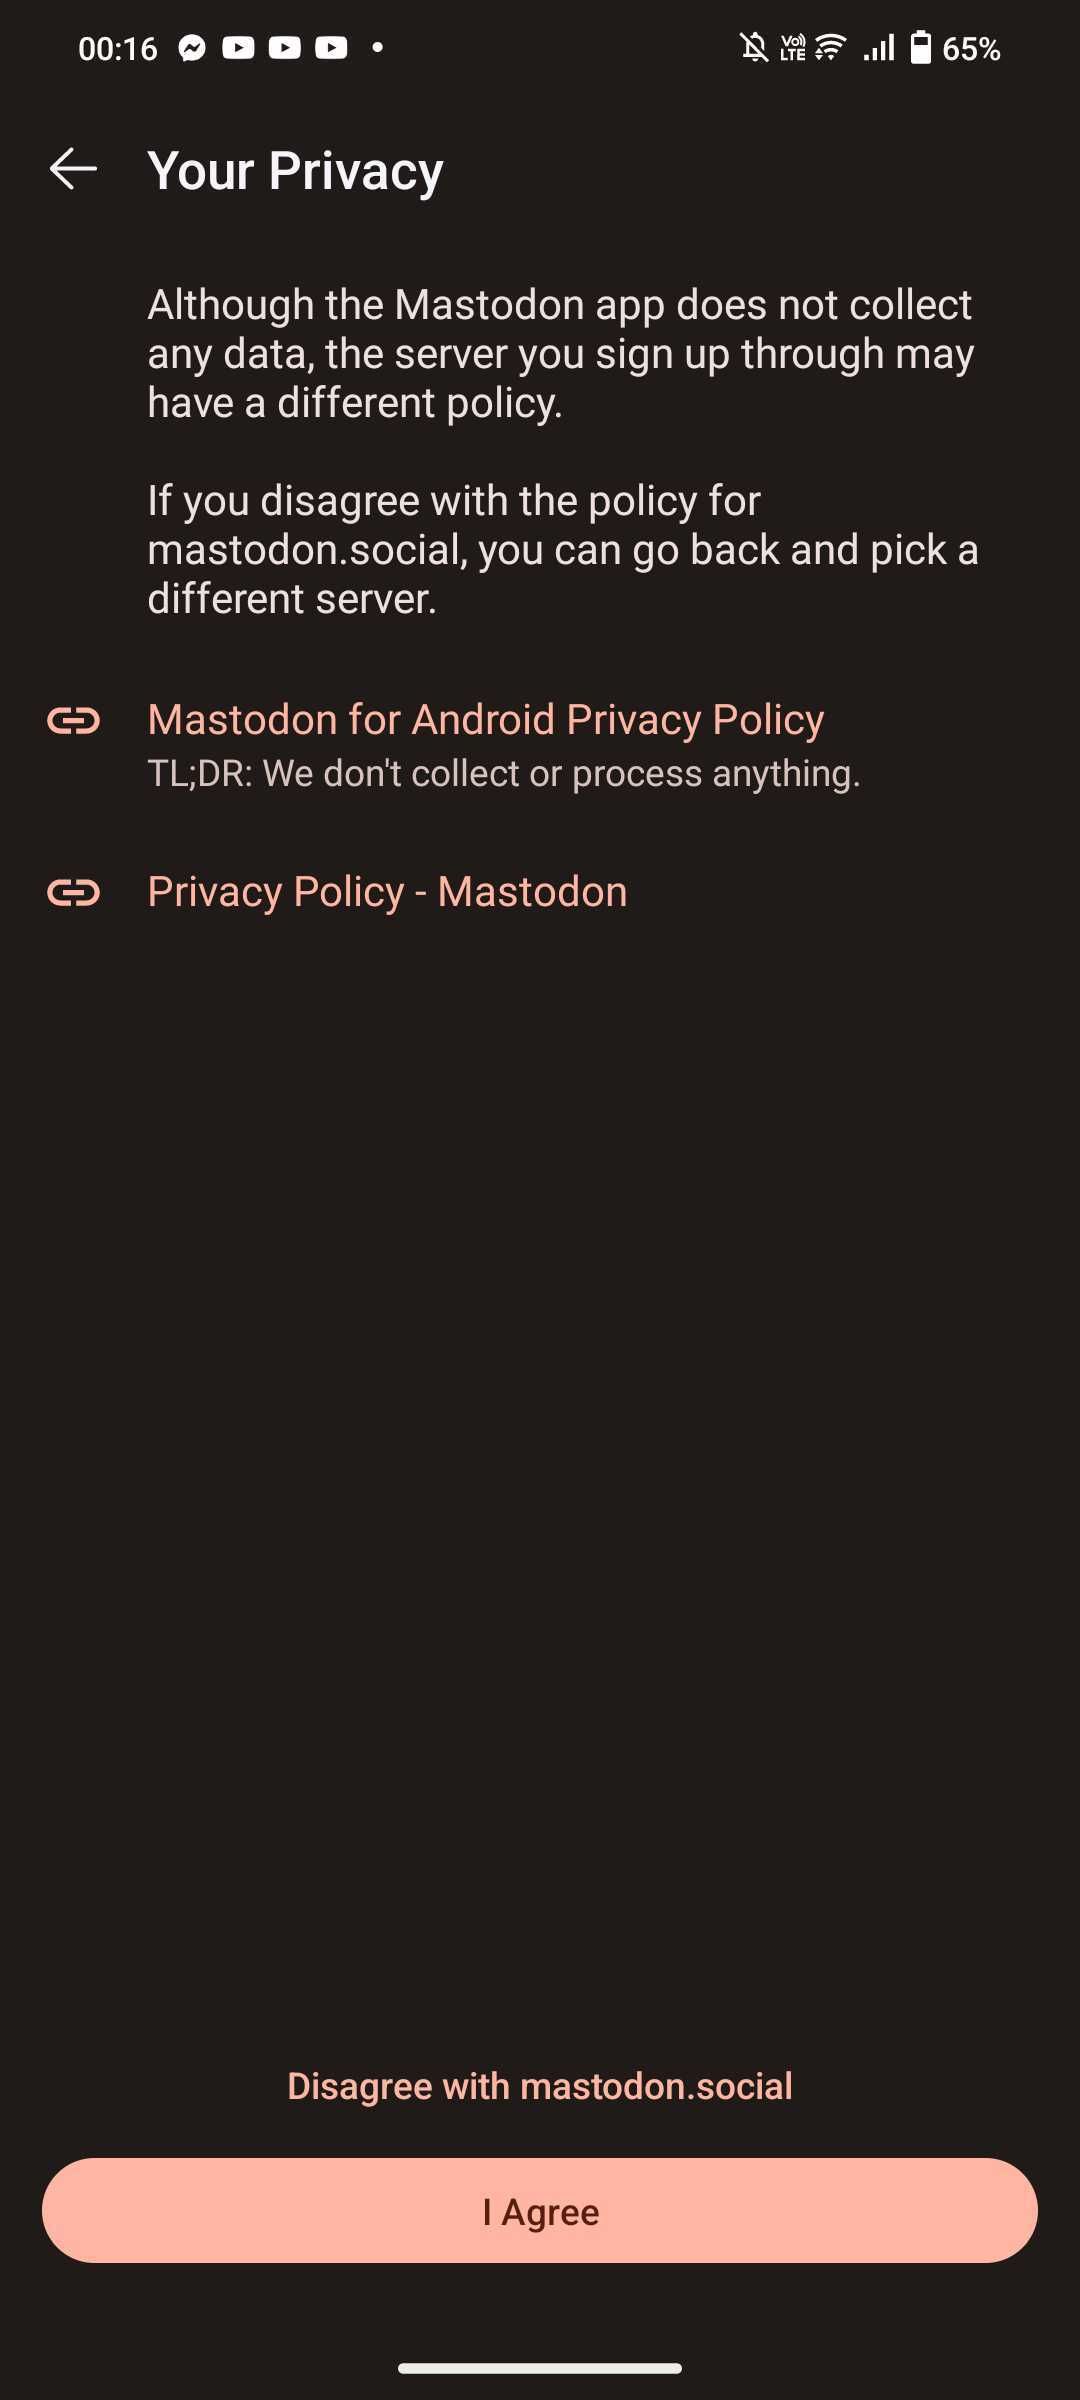 mastodon.social privacy policy